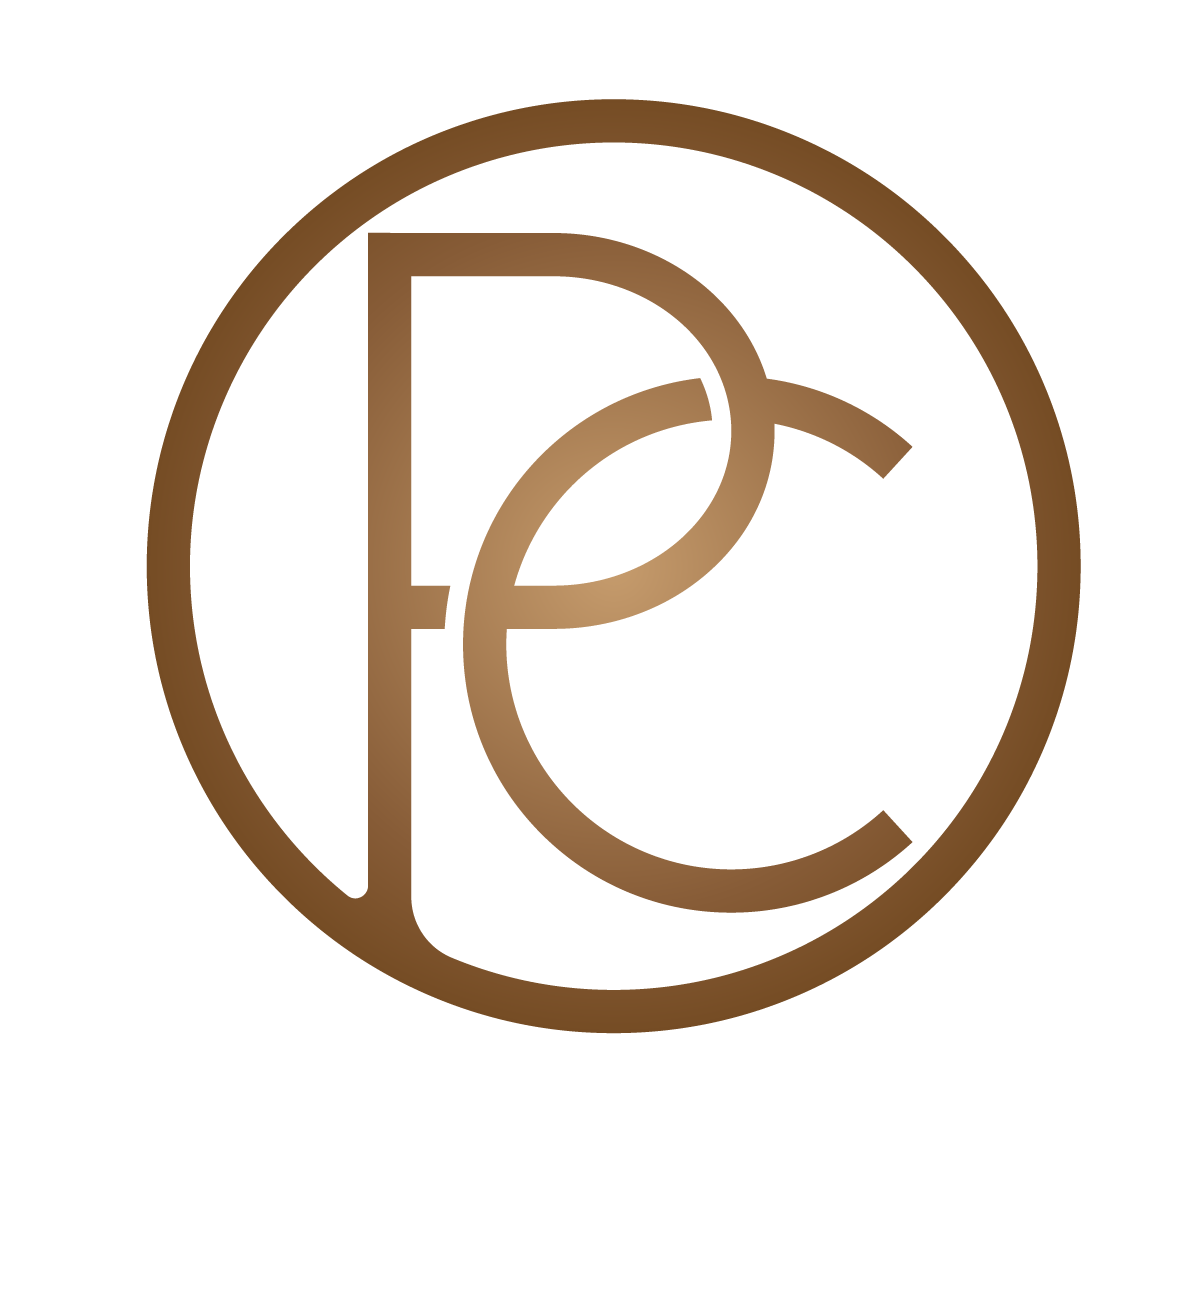 Pat Carr